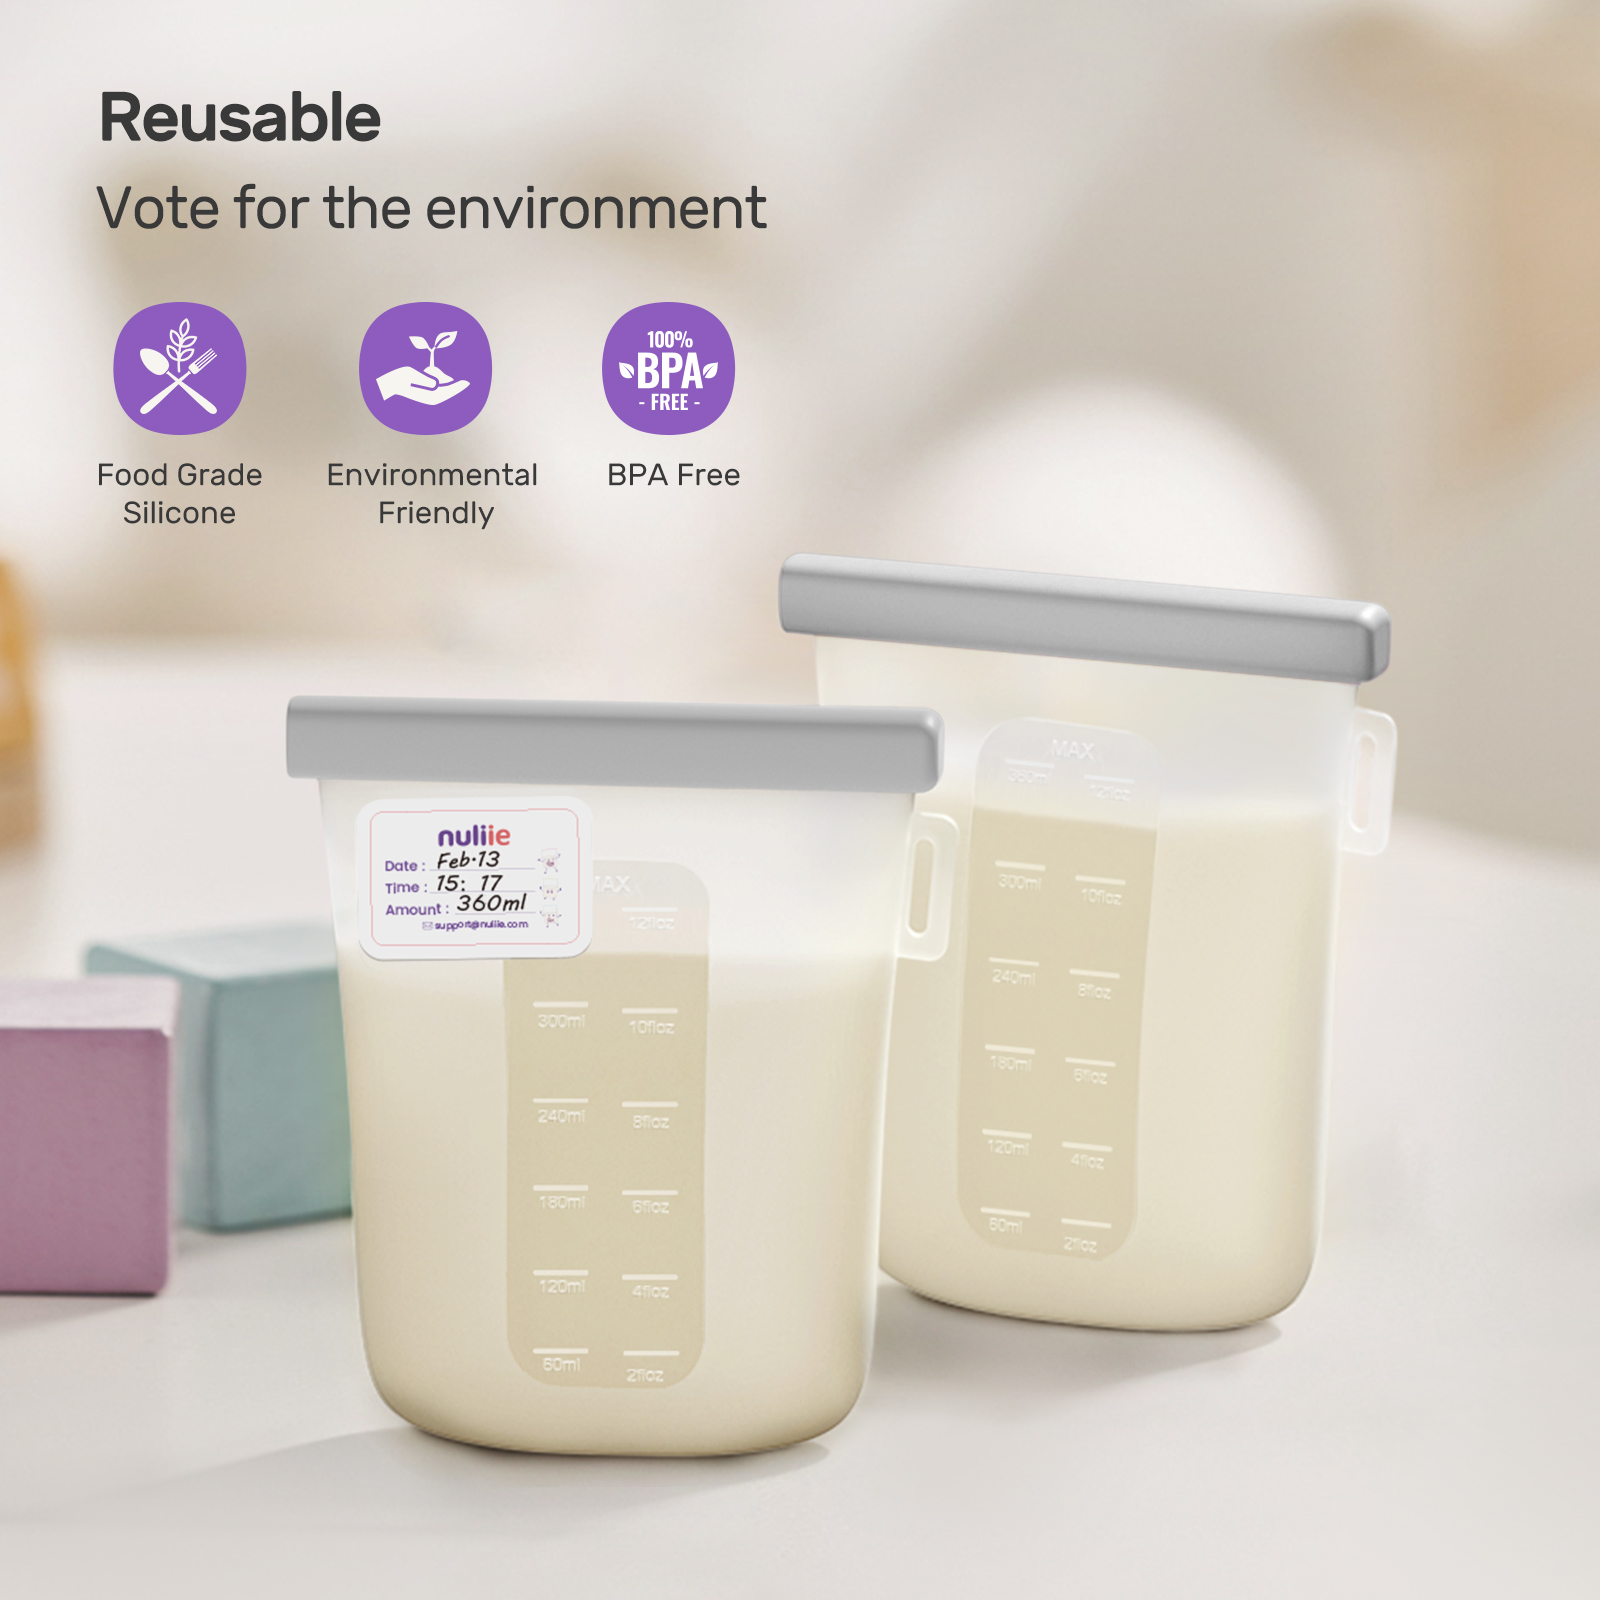 Reusable Milk Storage Bags